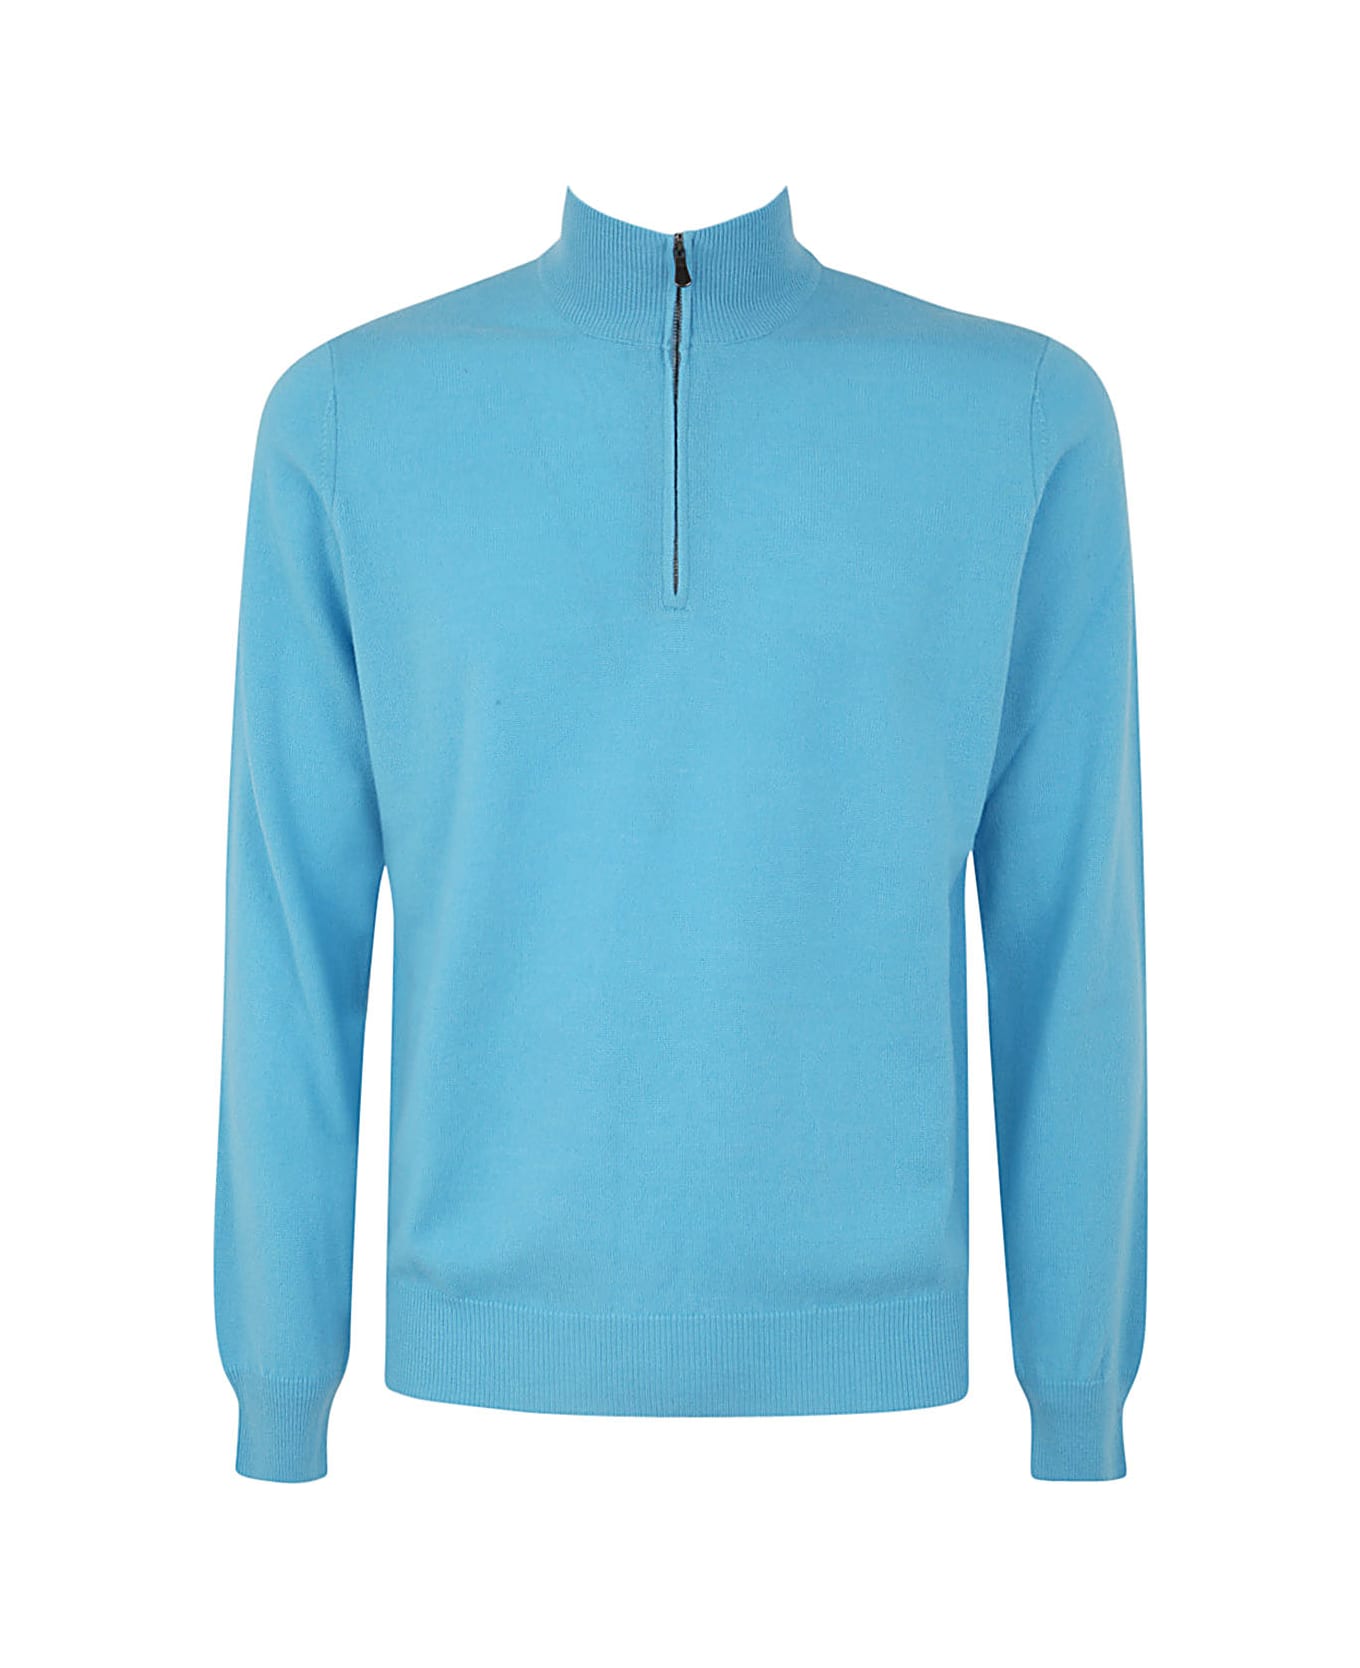 Filippo De Laurentiis Wool Cashmere Long Sleeves Half Zipped Sweater - Light Blue